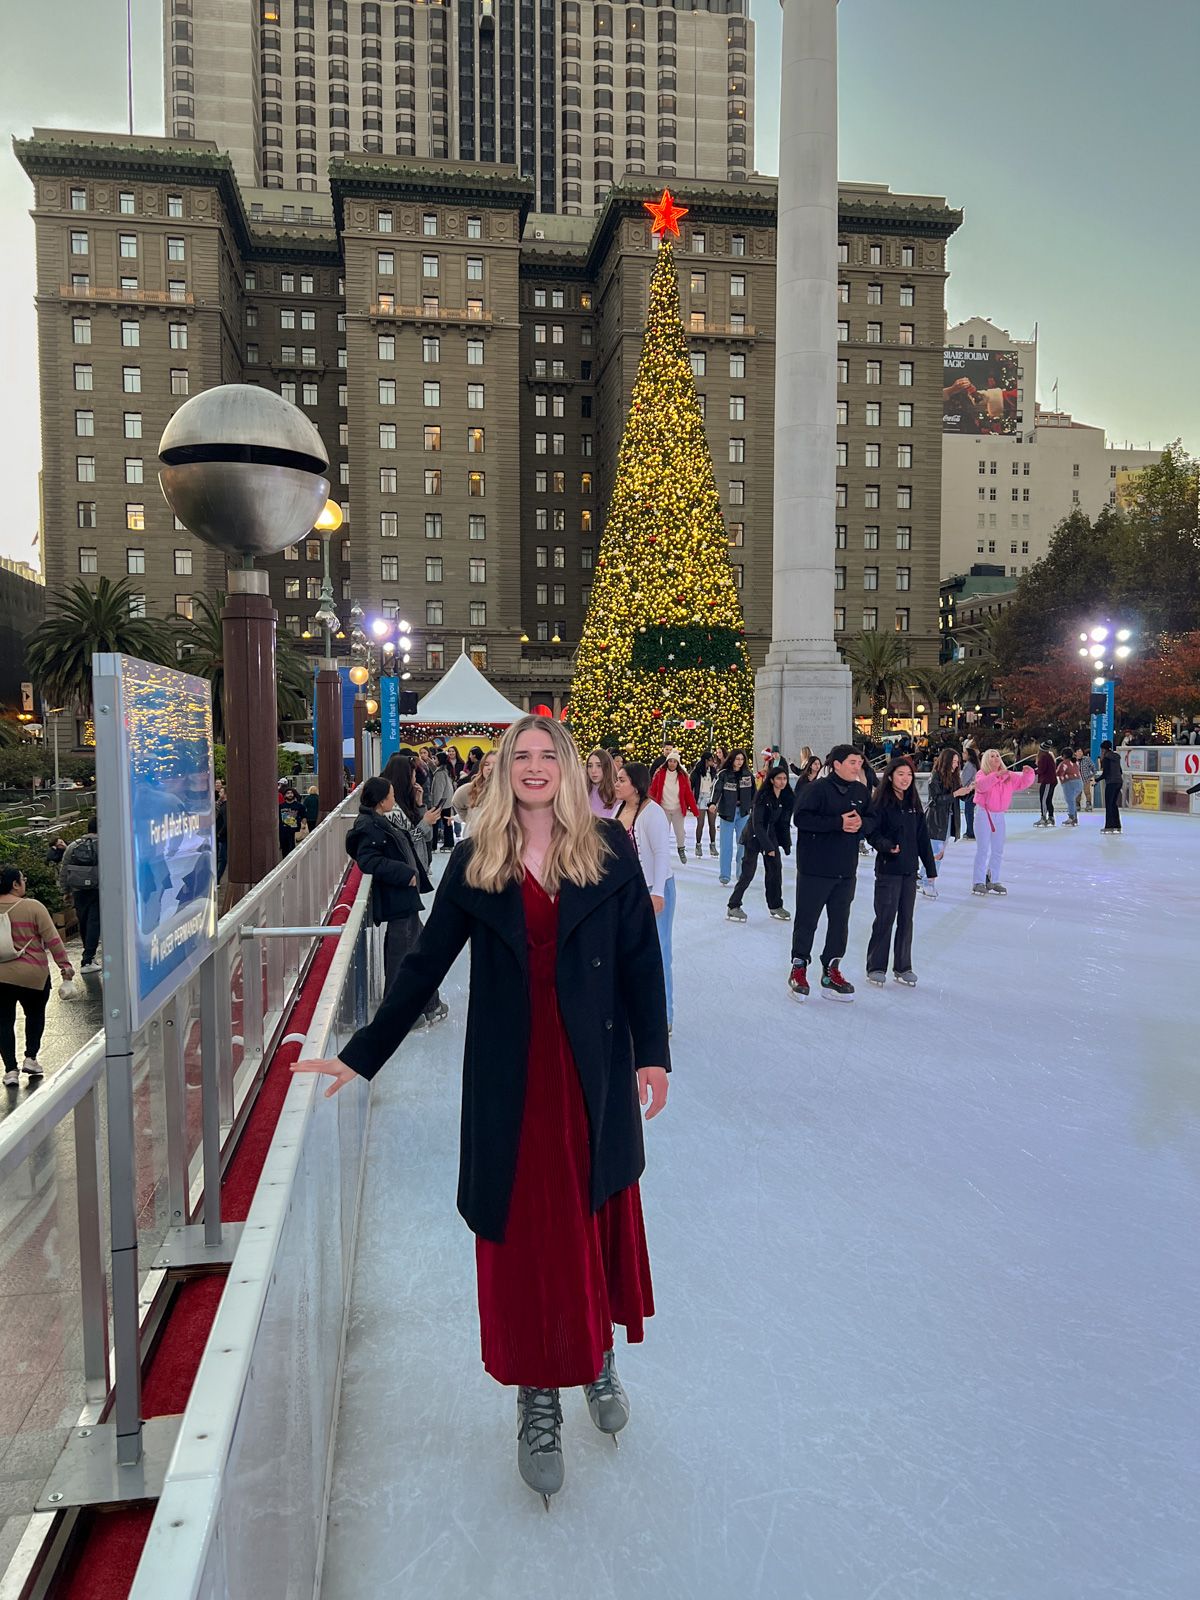 Union Square Ice Skating